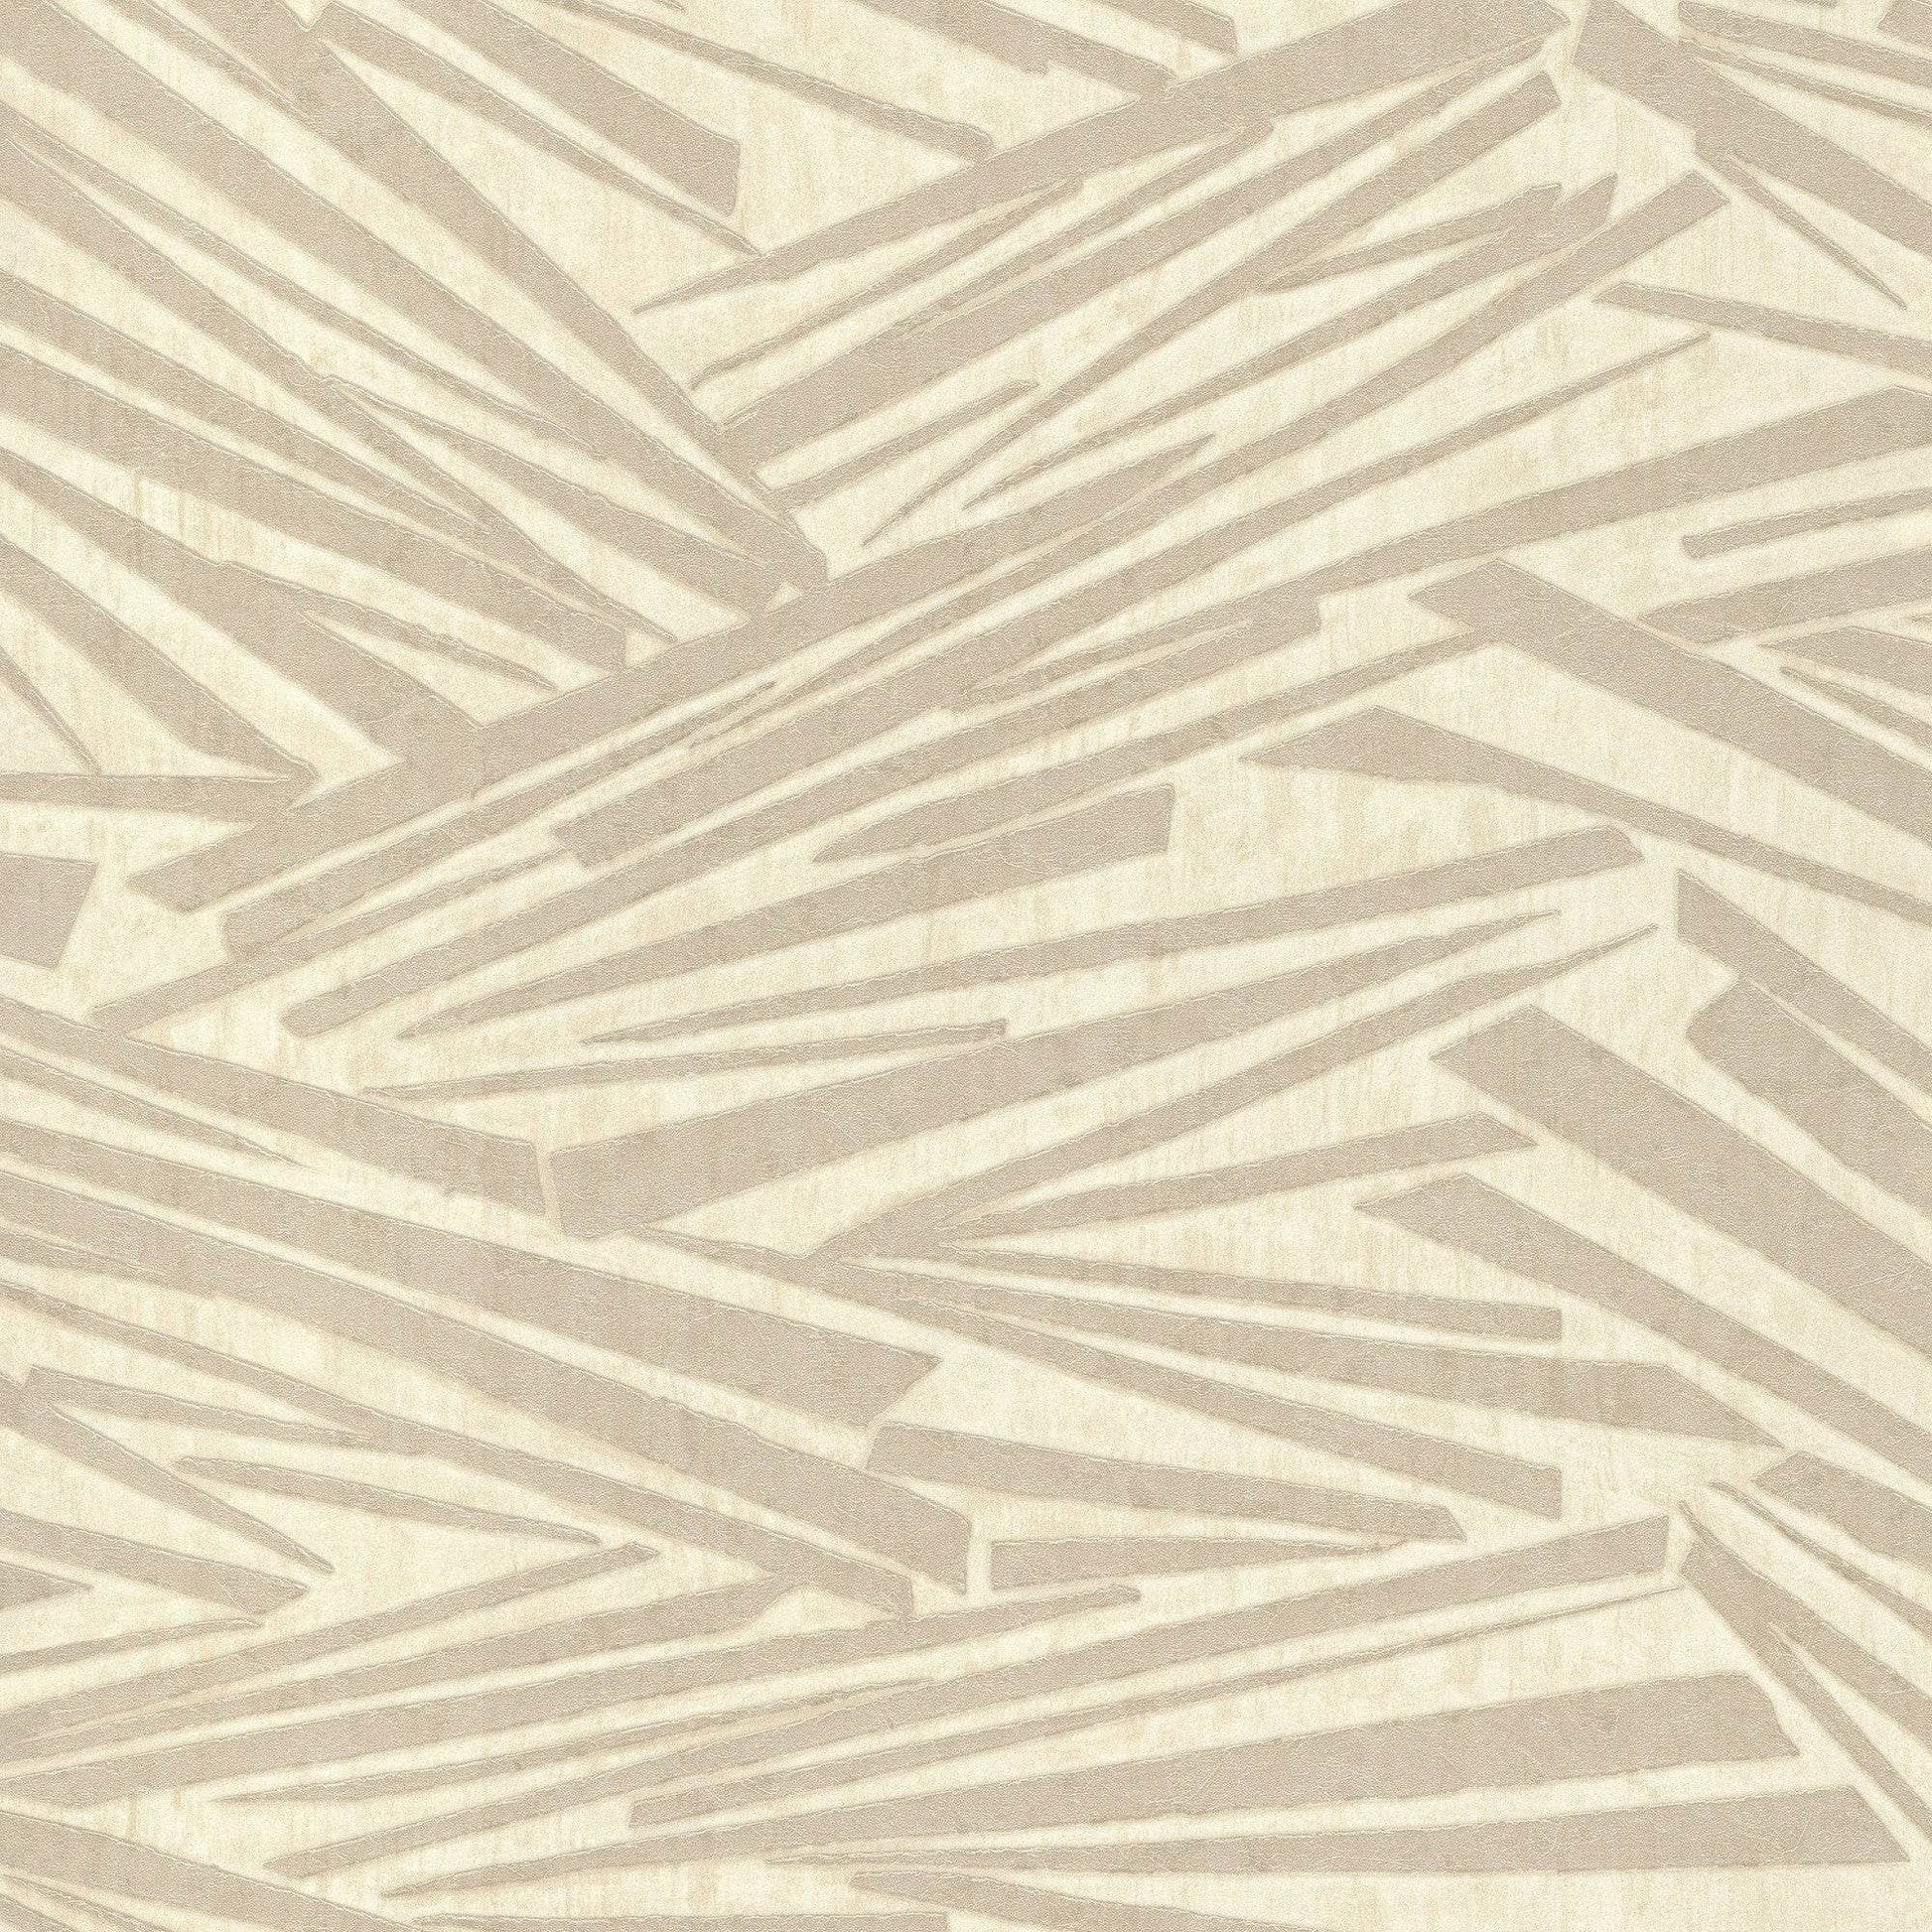 Wallpaper - Rasch Sky Lounge Abstract Fractal Pale Beige - 608335  -  60009360